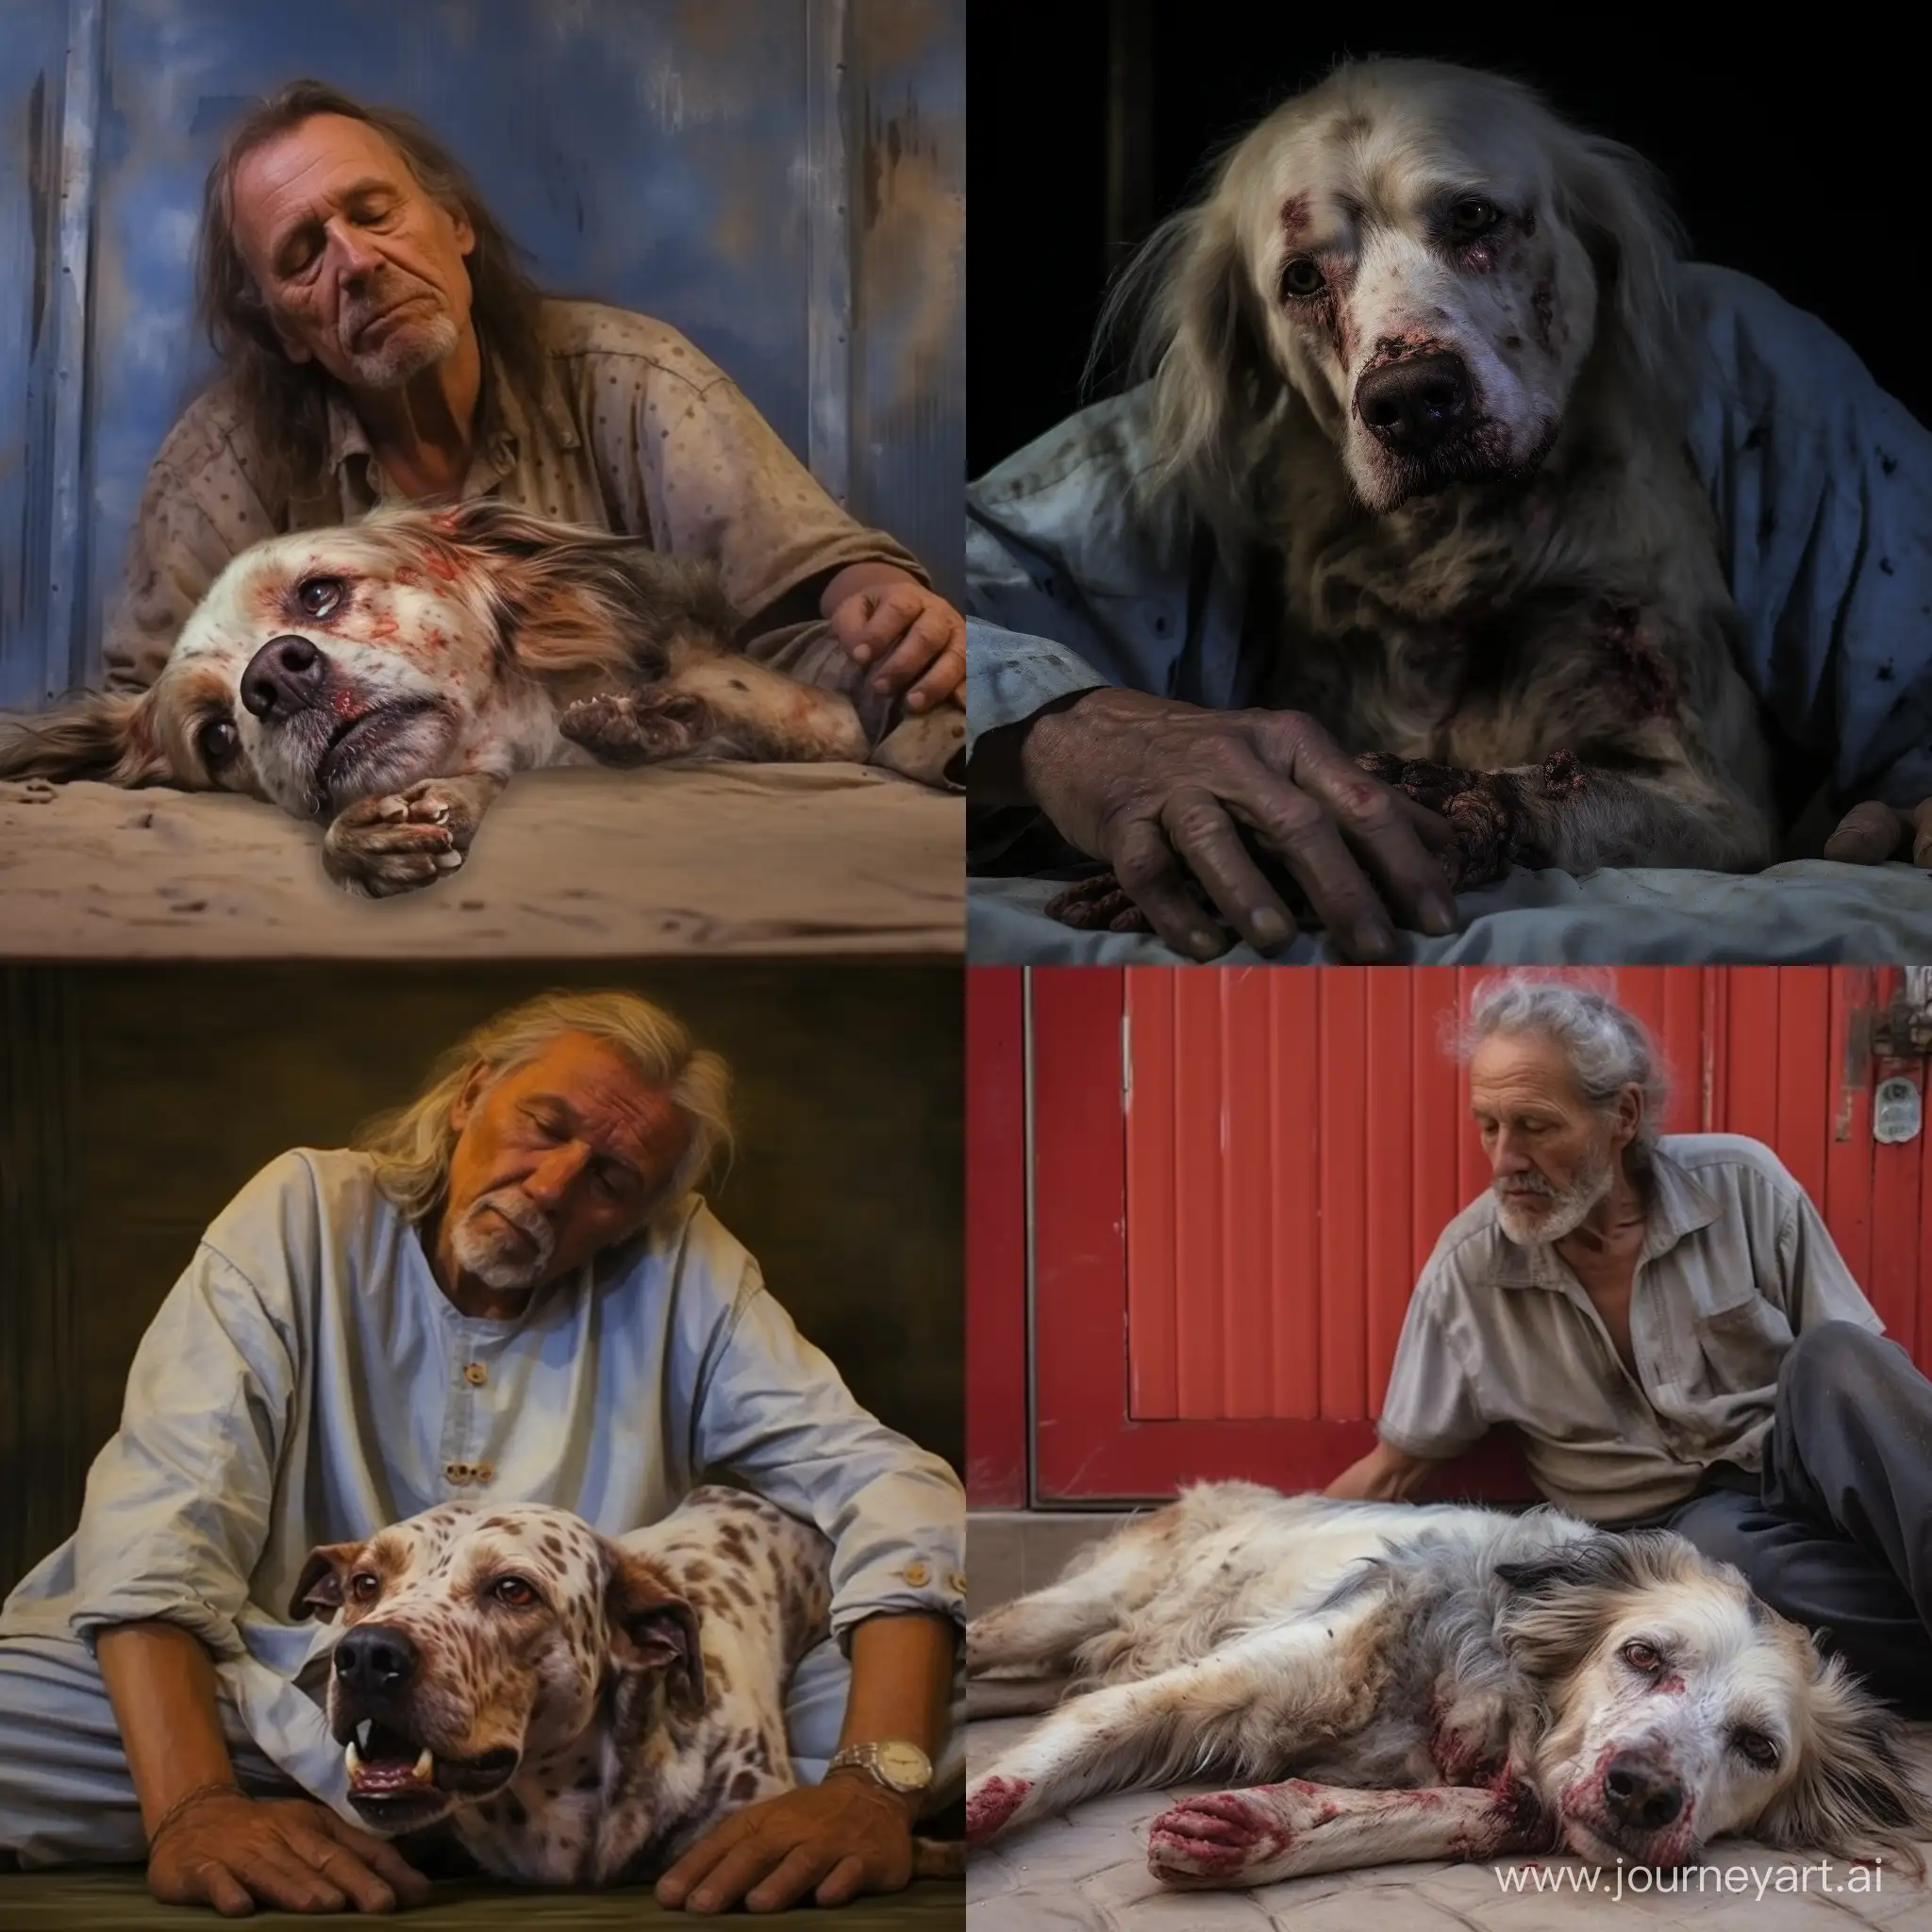 Heartfelt-Farewell-Man-Comforts-Dying-Dog-in-Emotional-Hyperrealistic-Photograph